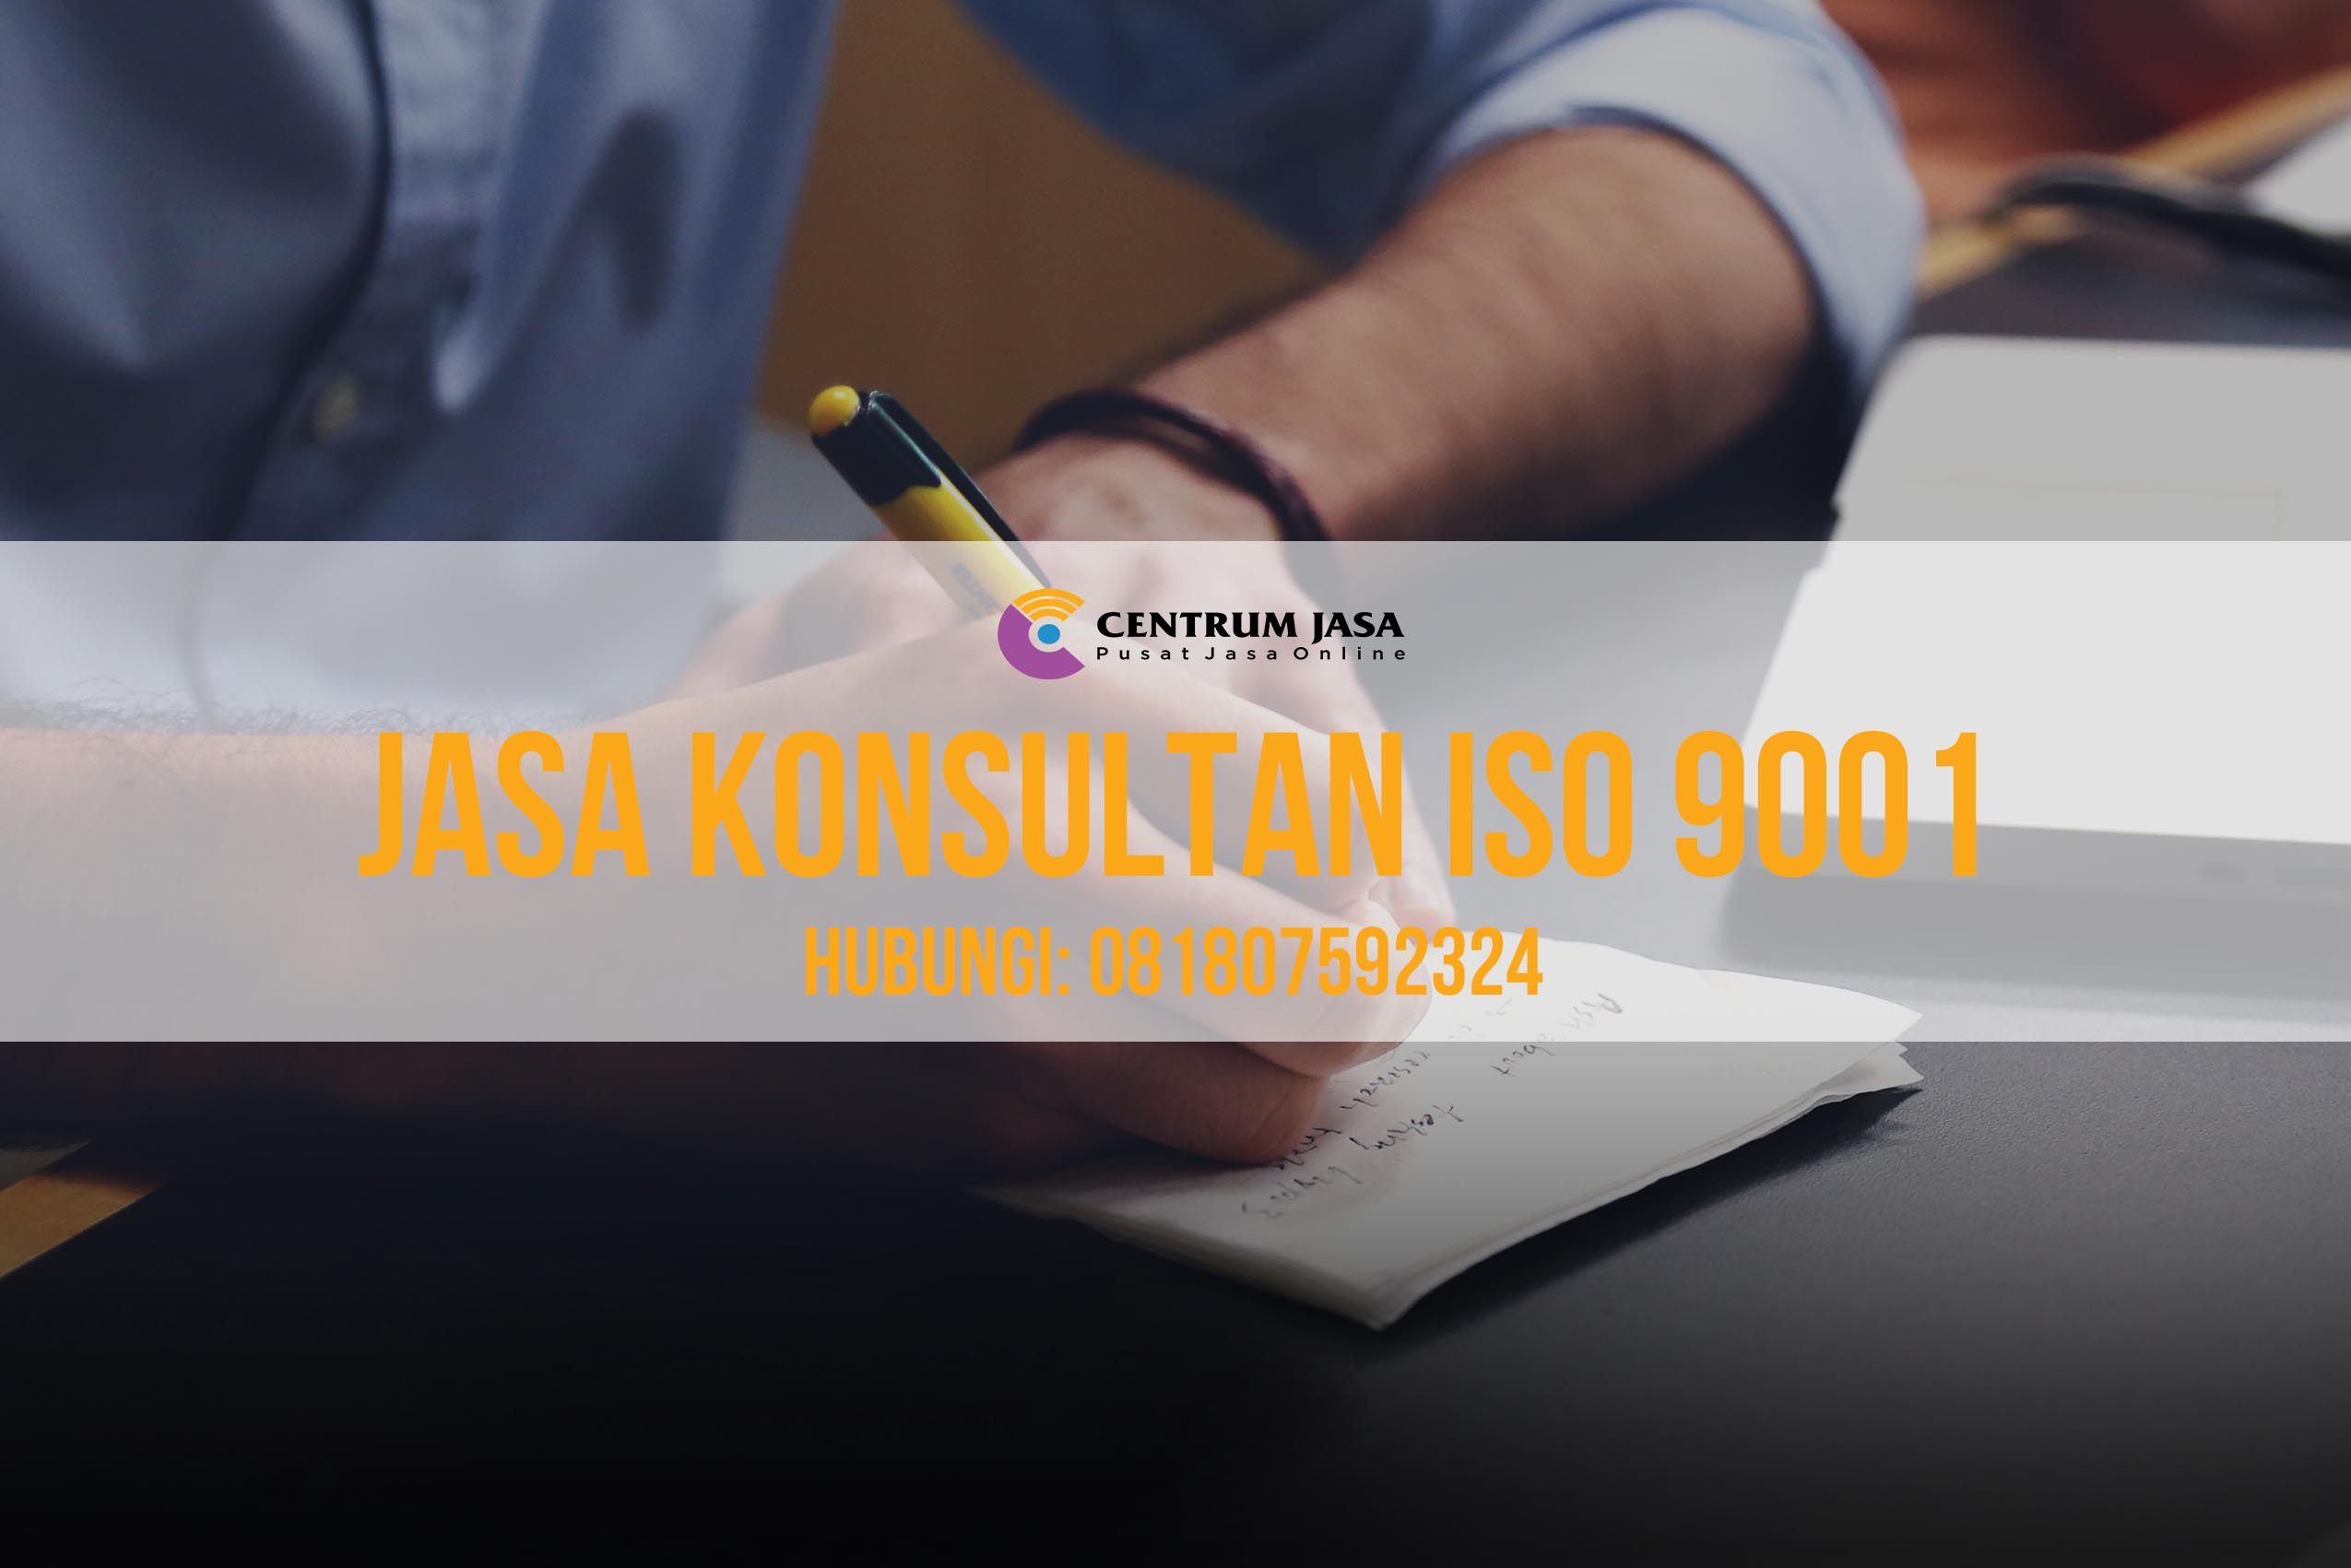 JASA KONSULTAN ISO 9001